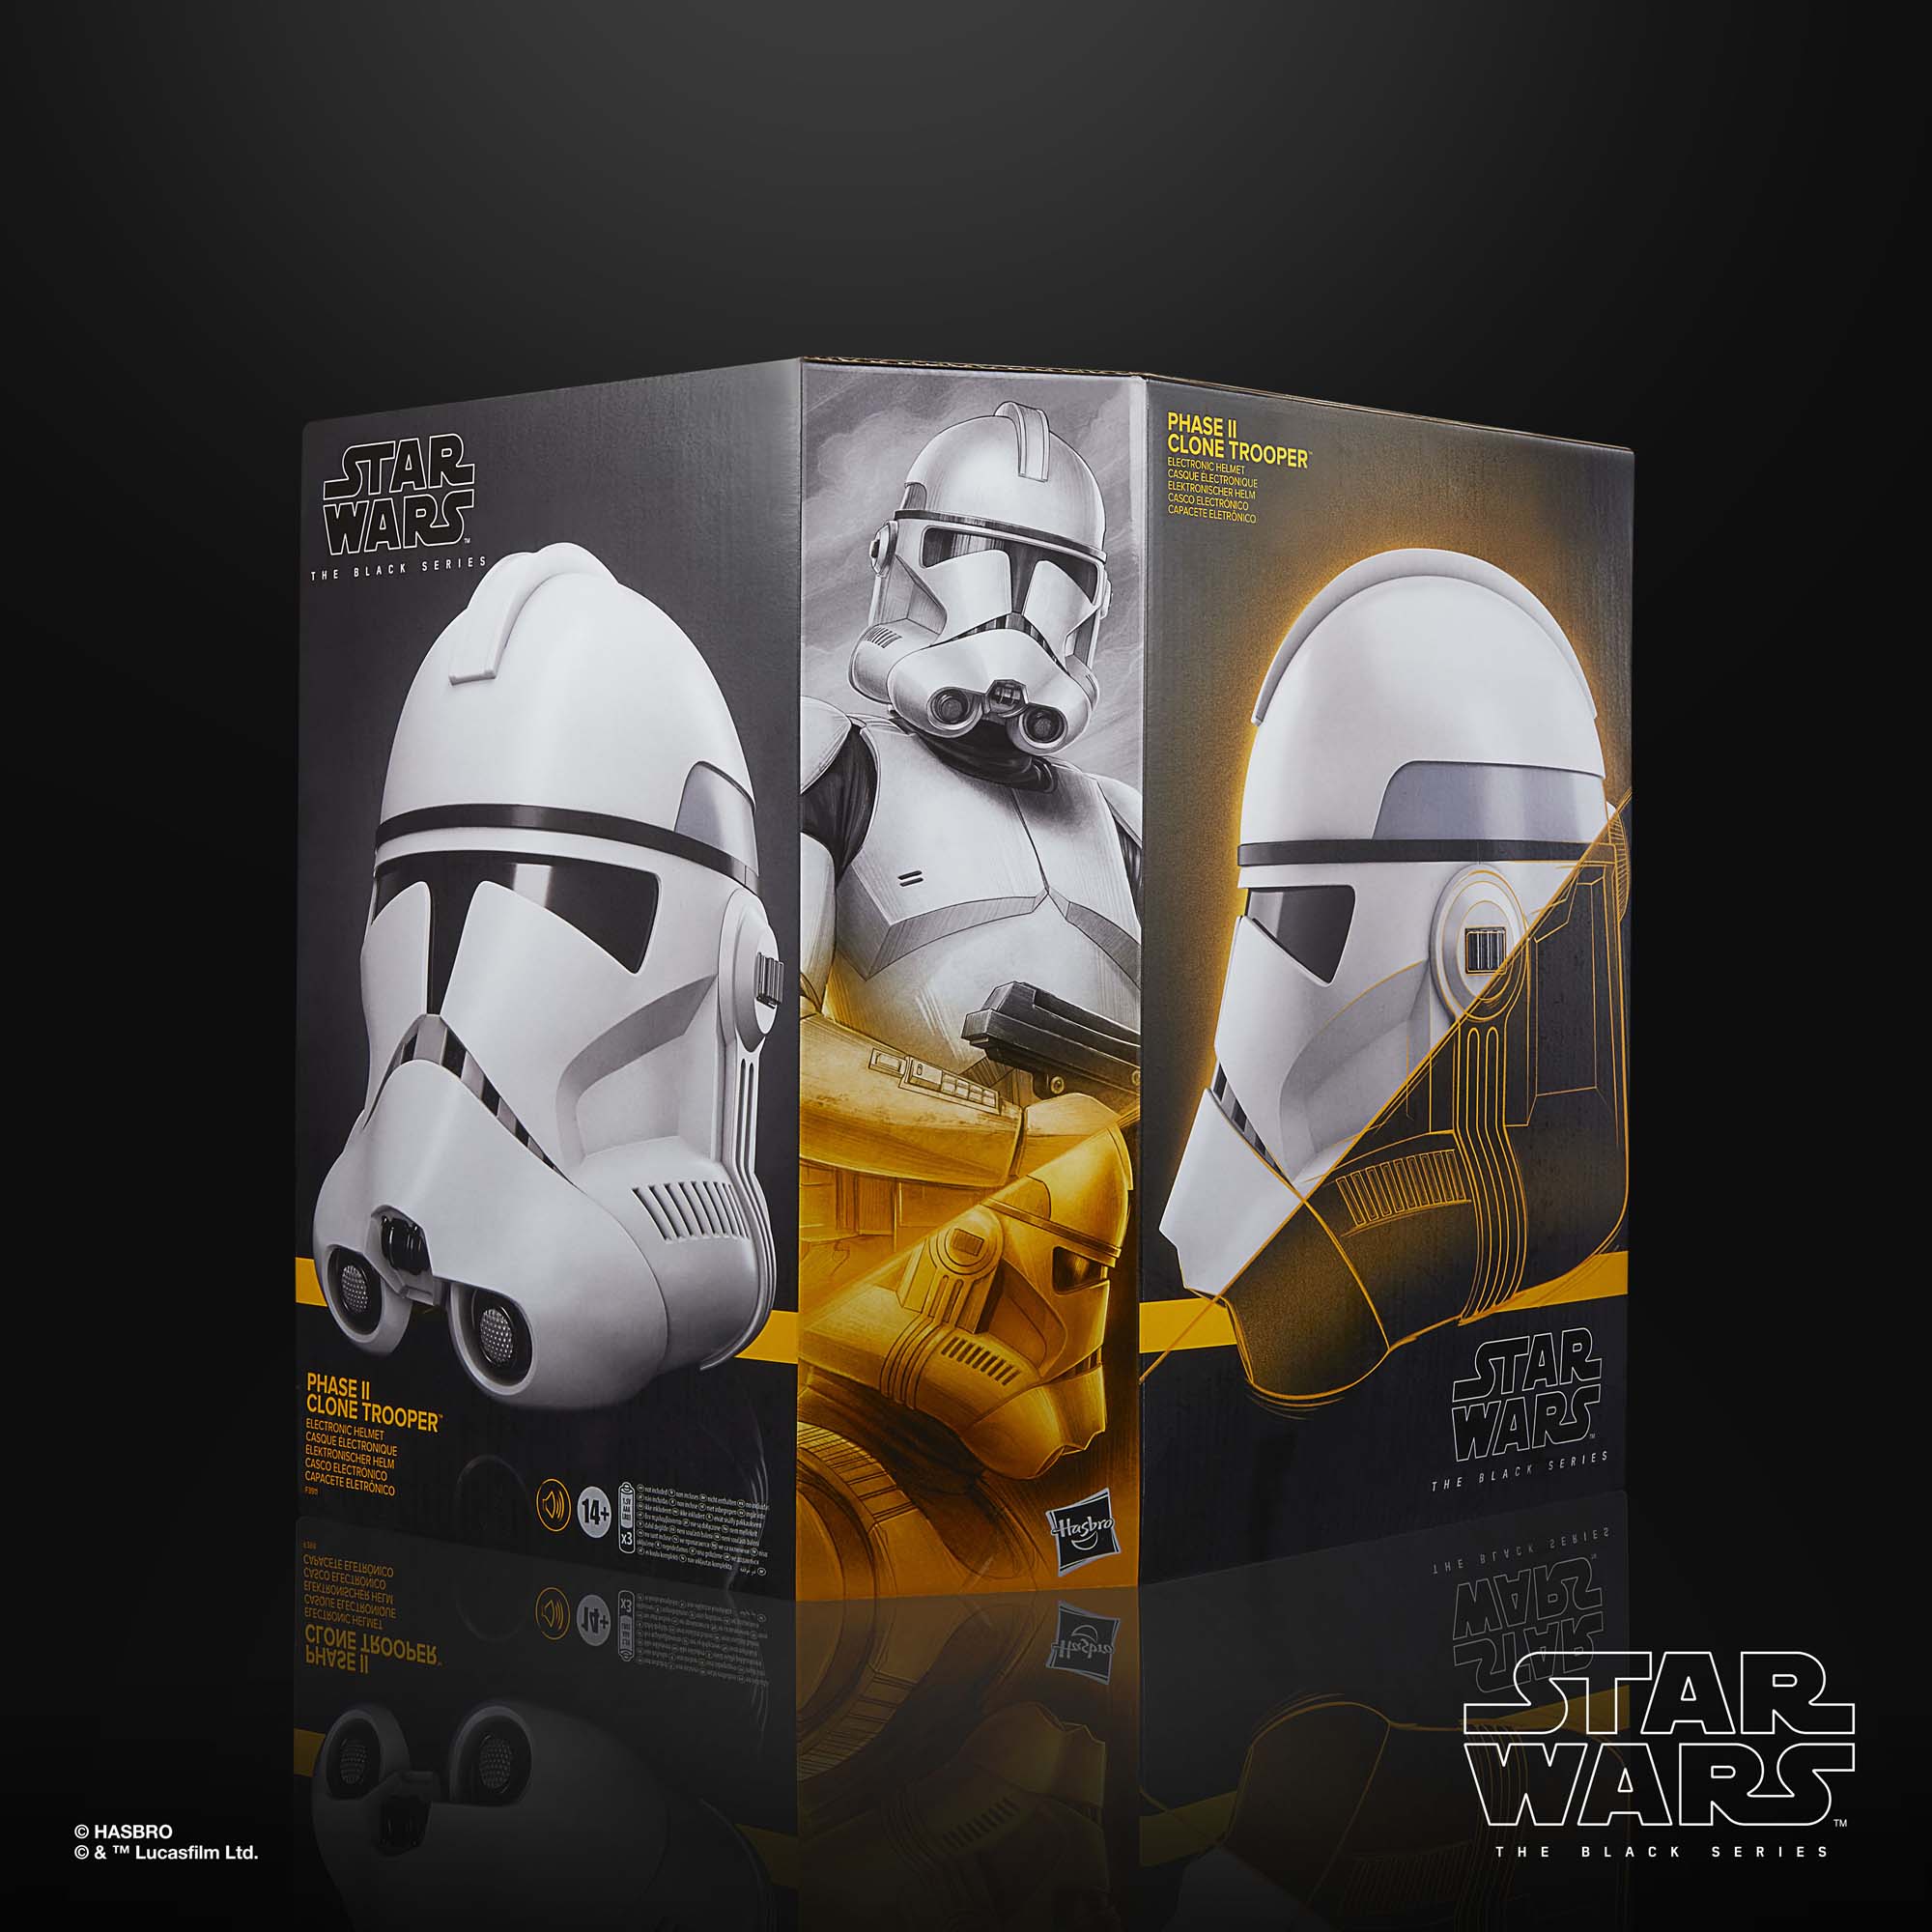 Star Wars The Black Series Phase II Clone Trooper Premium Electronic Helmet  F39115L0 5010994162764